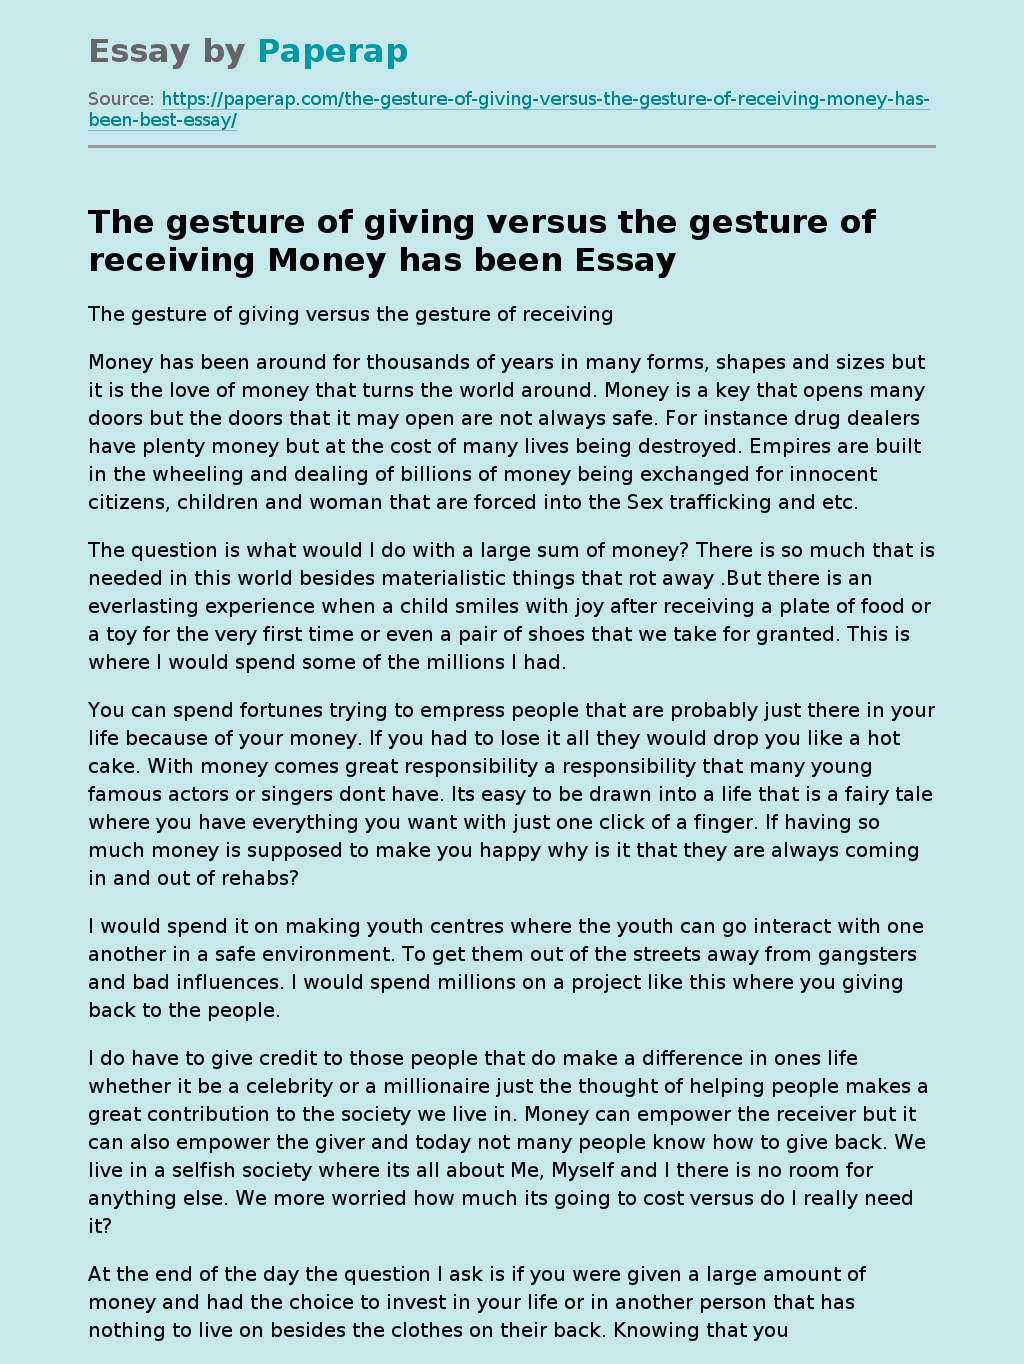 The gesture of giving versus the gesture of receiving